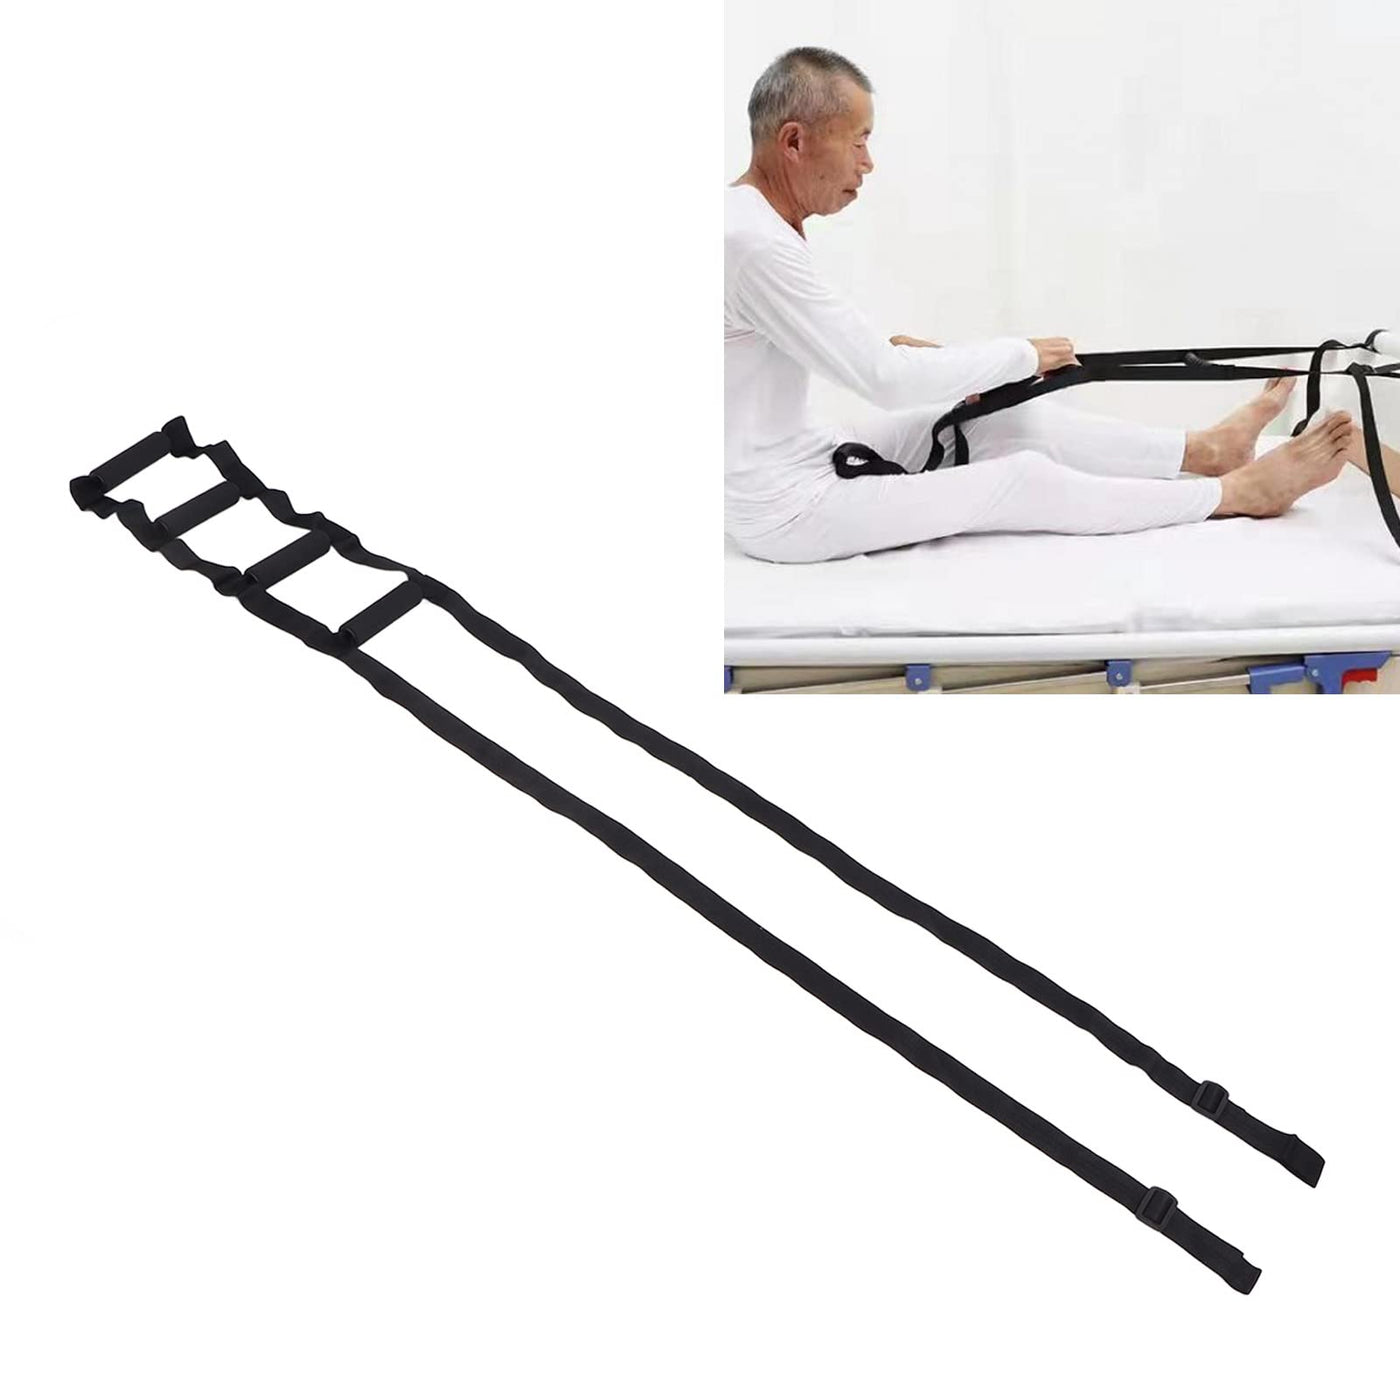 Cheap Caddie Helper Bed Ladder Pull Up Assist for Elderly Senior